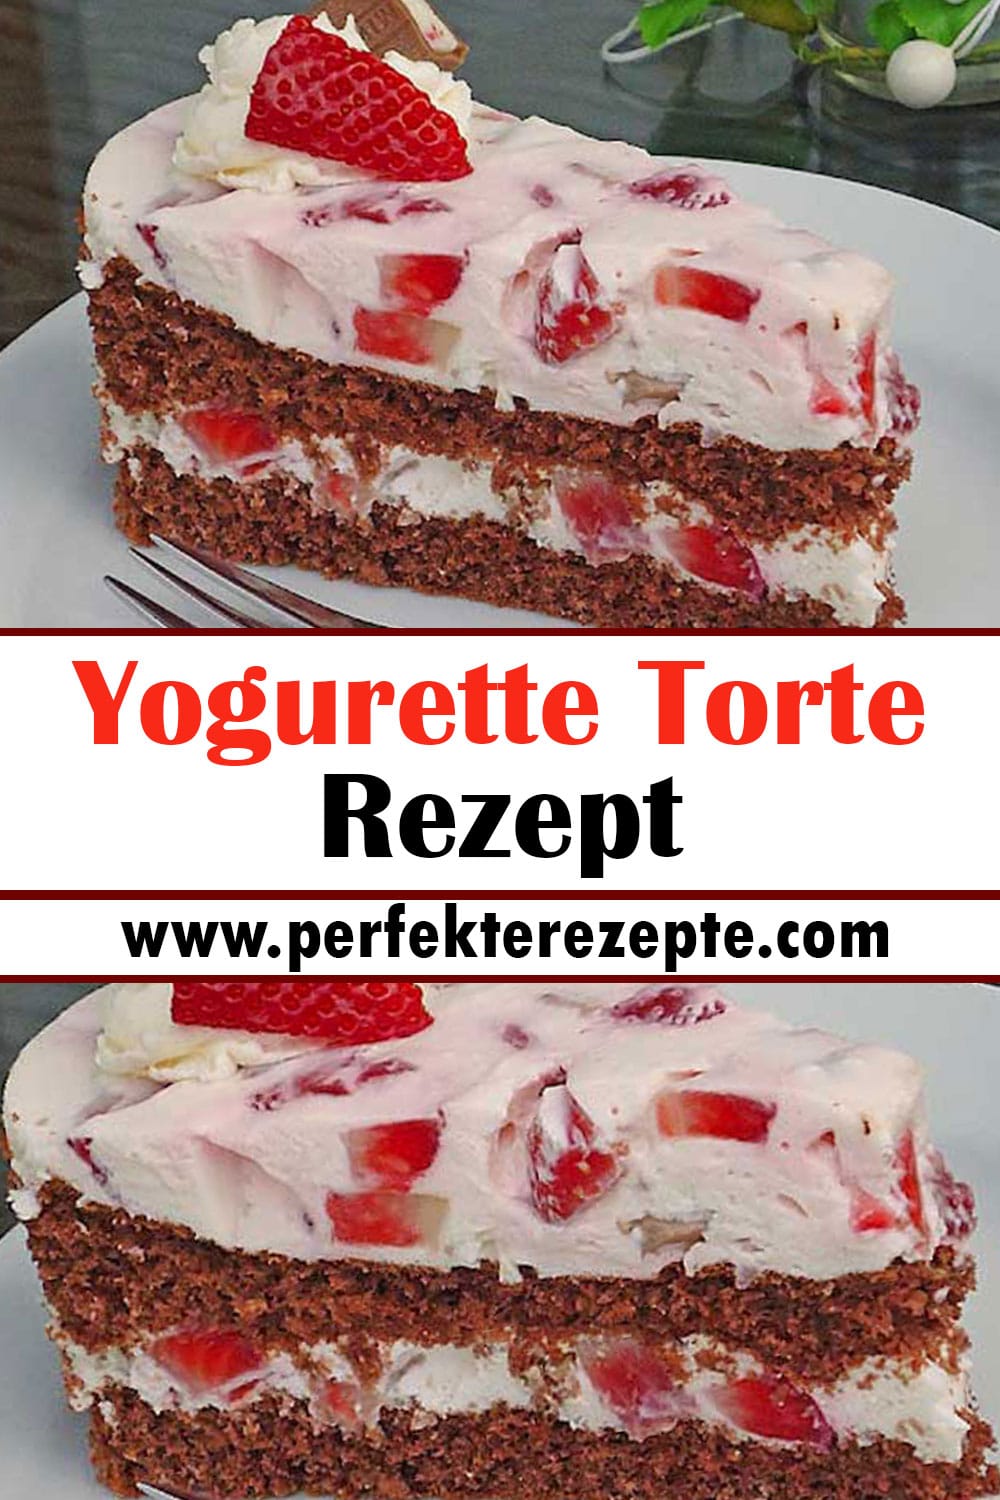 Yogurette Torte Rezept